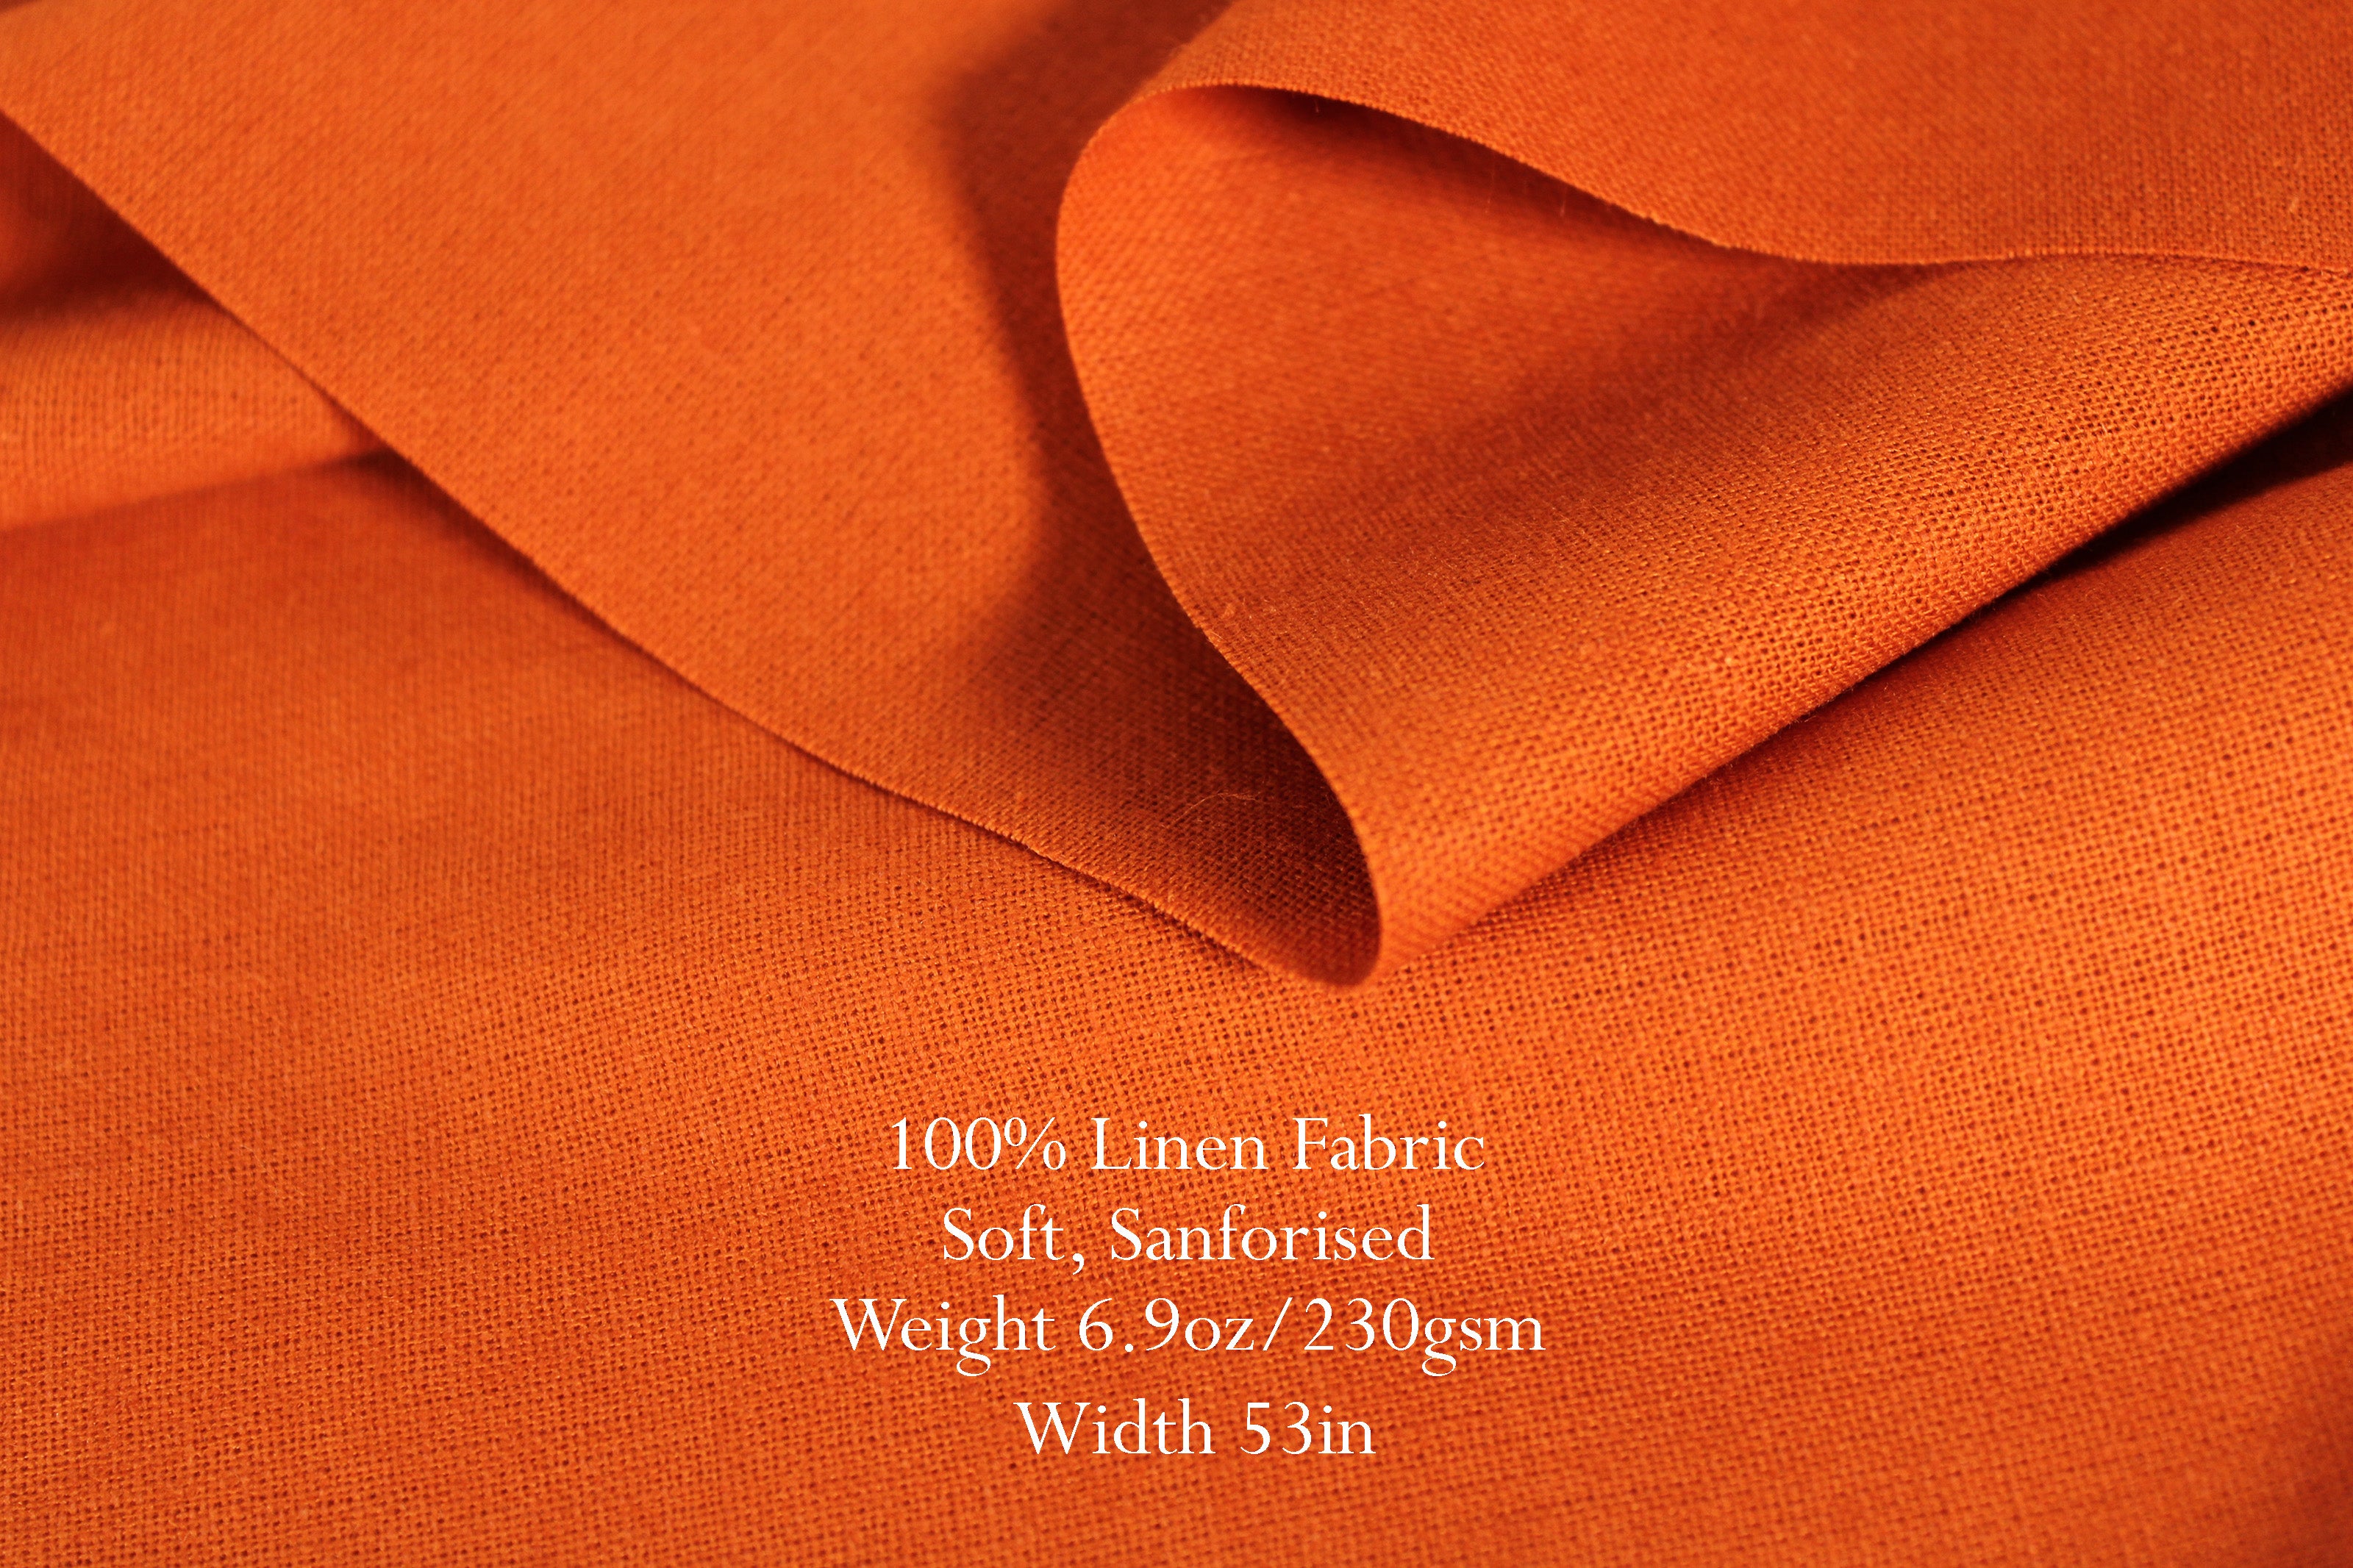 WHOLESALE Linen Fabric USA / Linen Fabric Wholesale Direct / Linen by the Bolt / Rust linen fabric